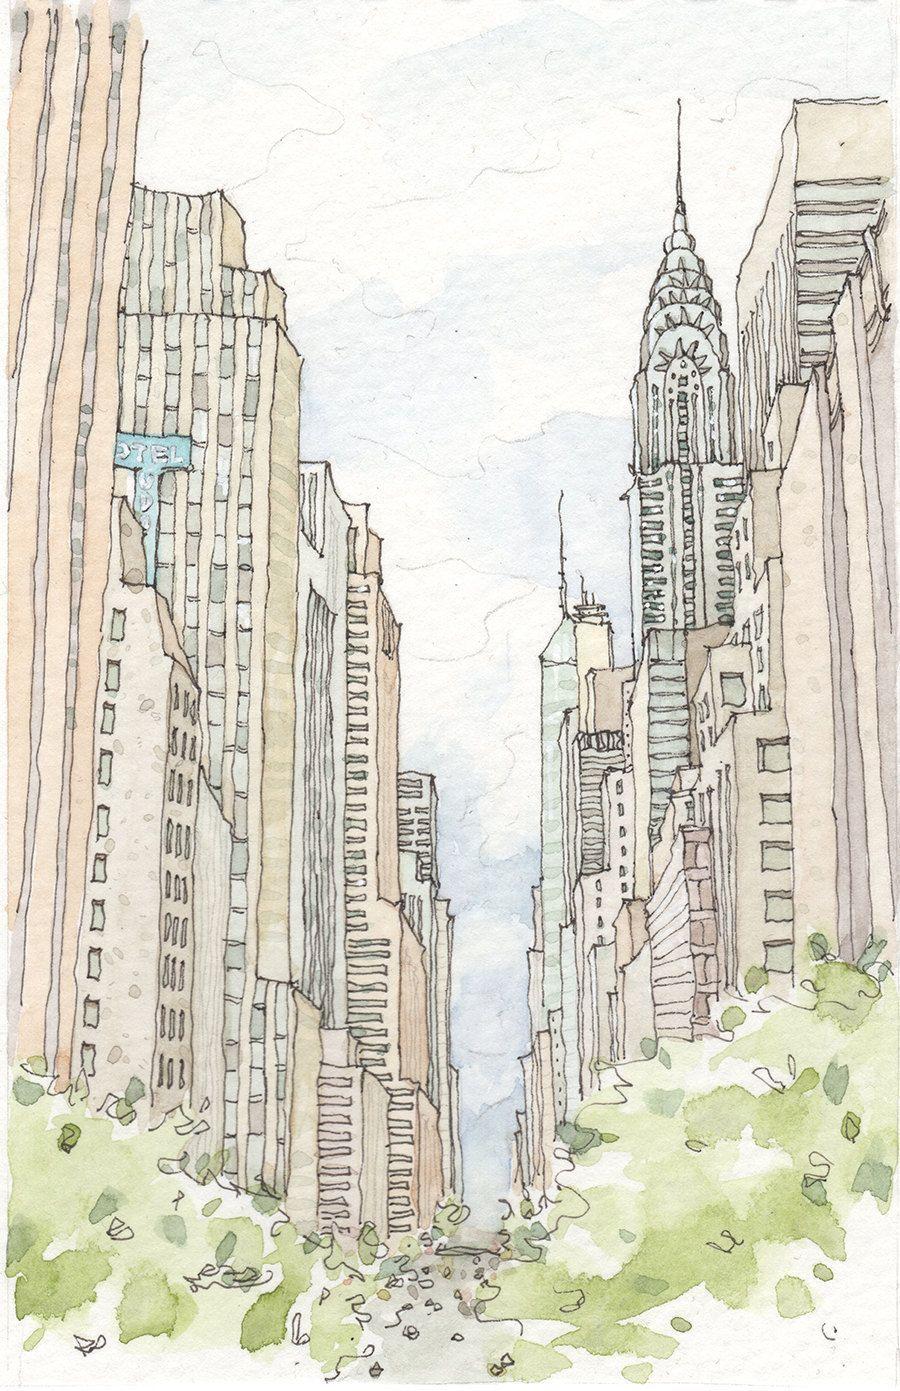 New York City Sketch Images  Free Download on Freepik